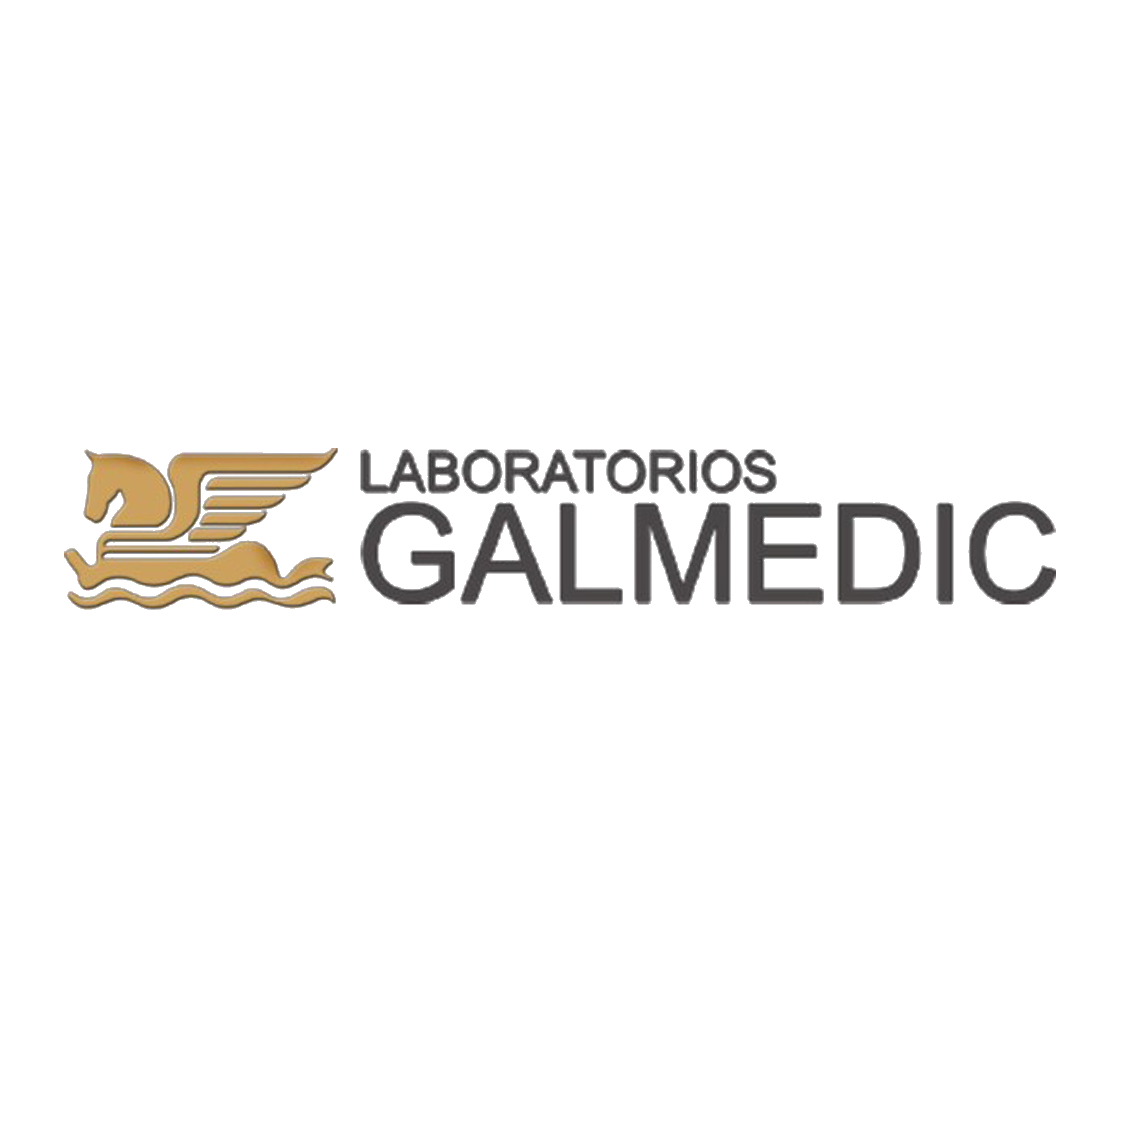 Galmedic